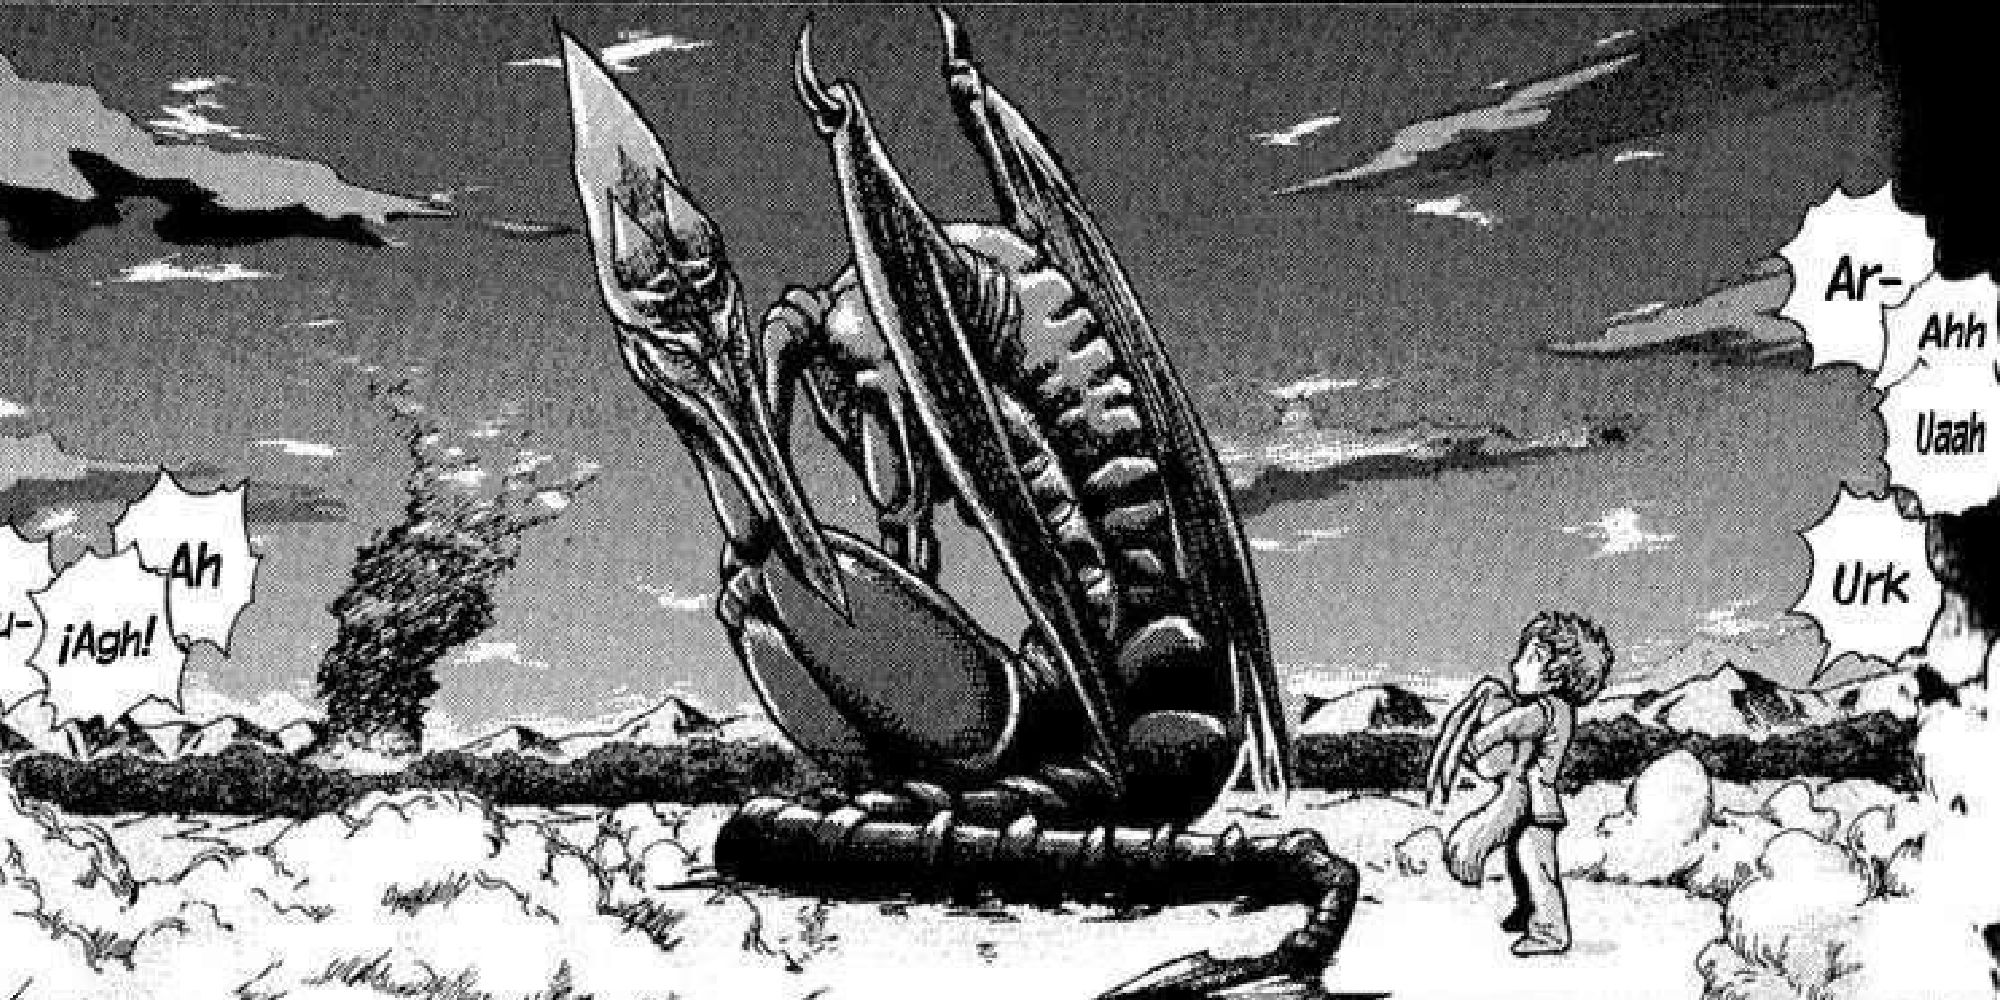 A Metroid manga panel where a young Samus approaches Ridley